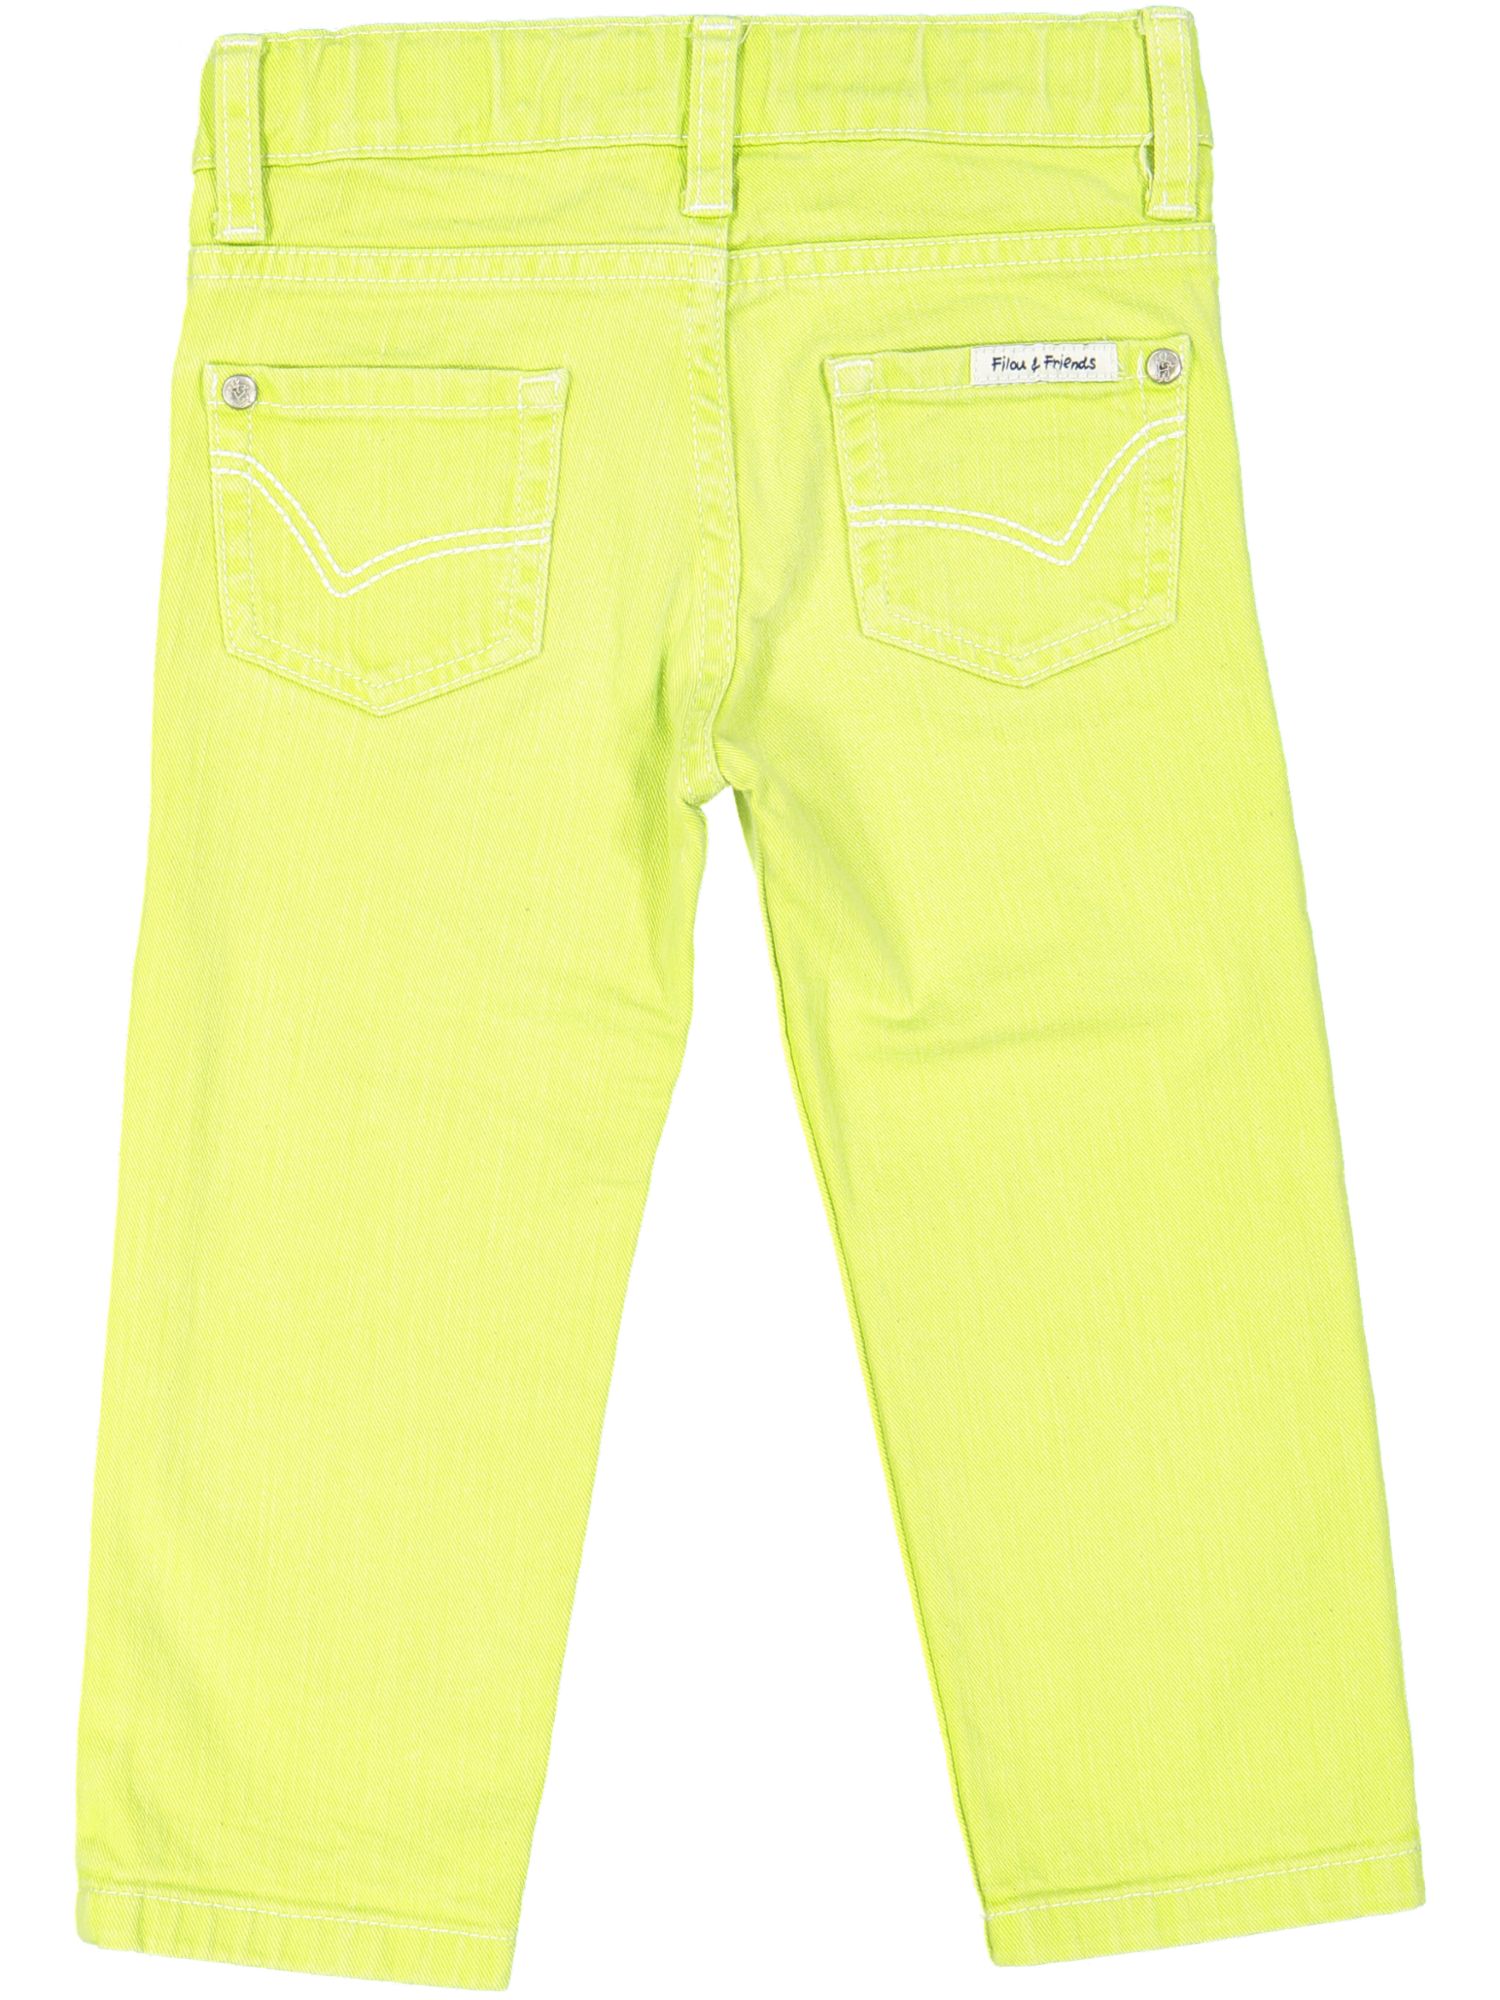 pants green fluo 02j